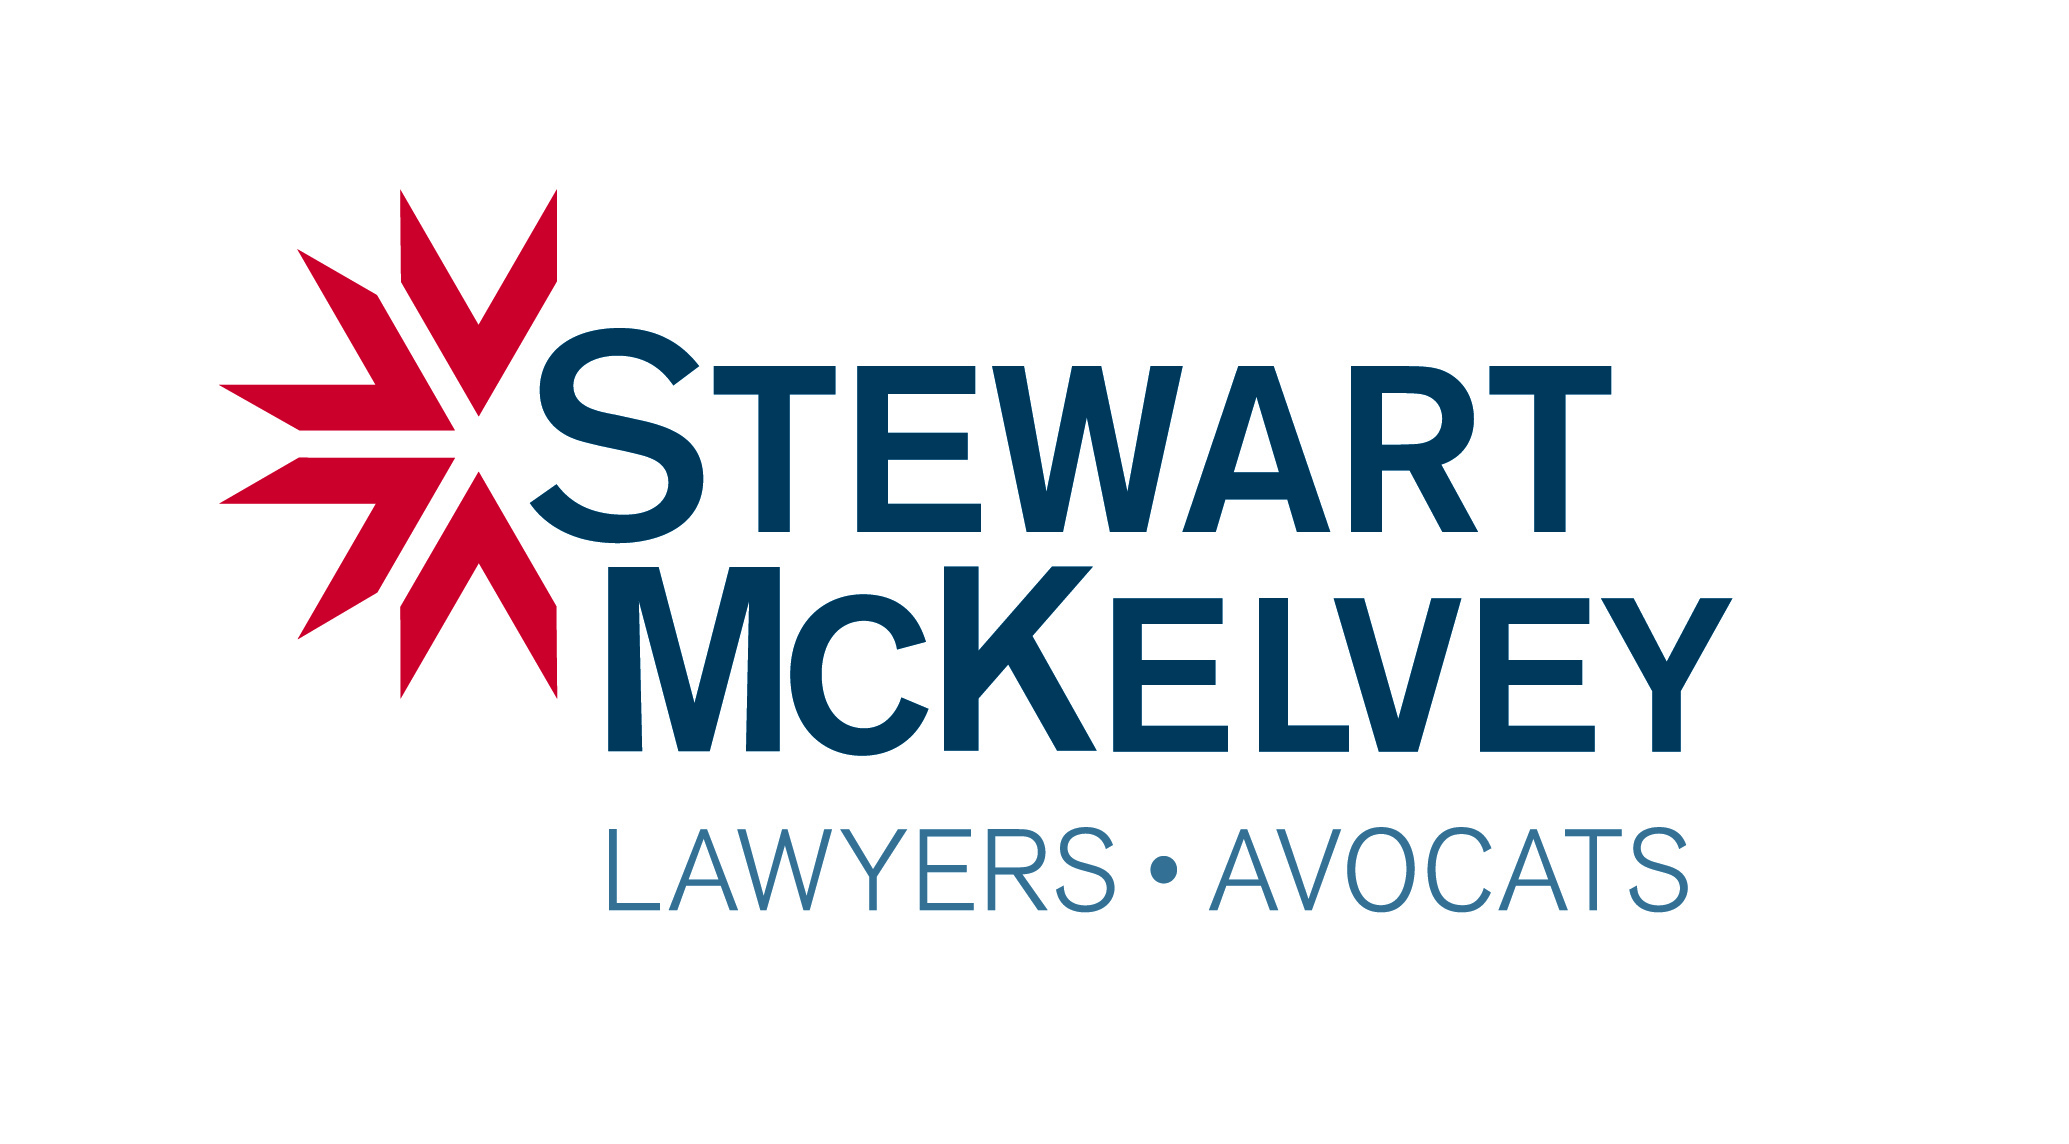 Stewart McKelvey Lawyers